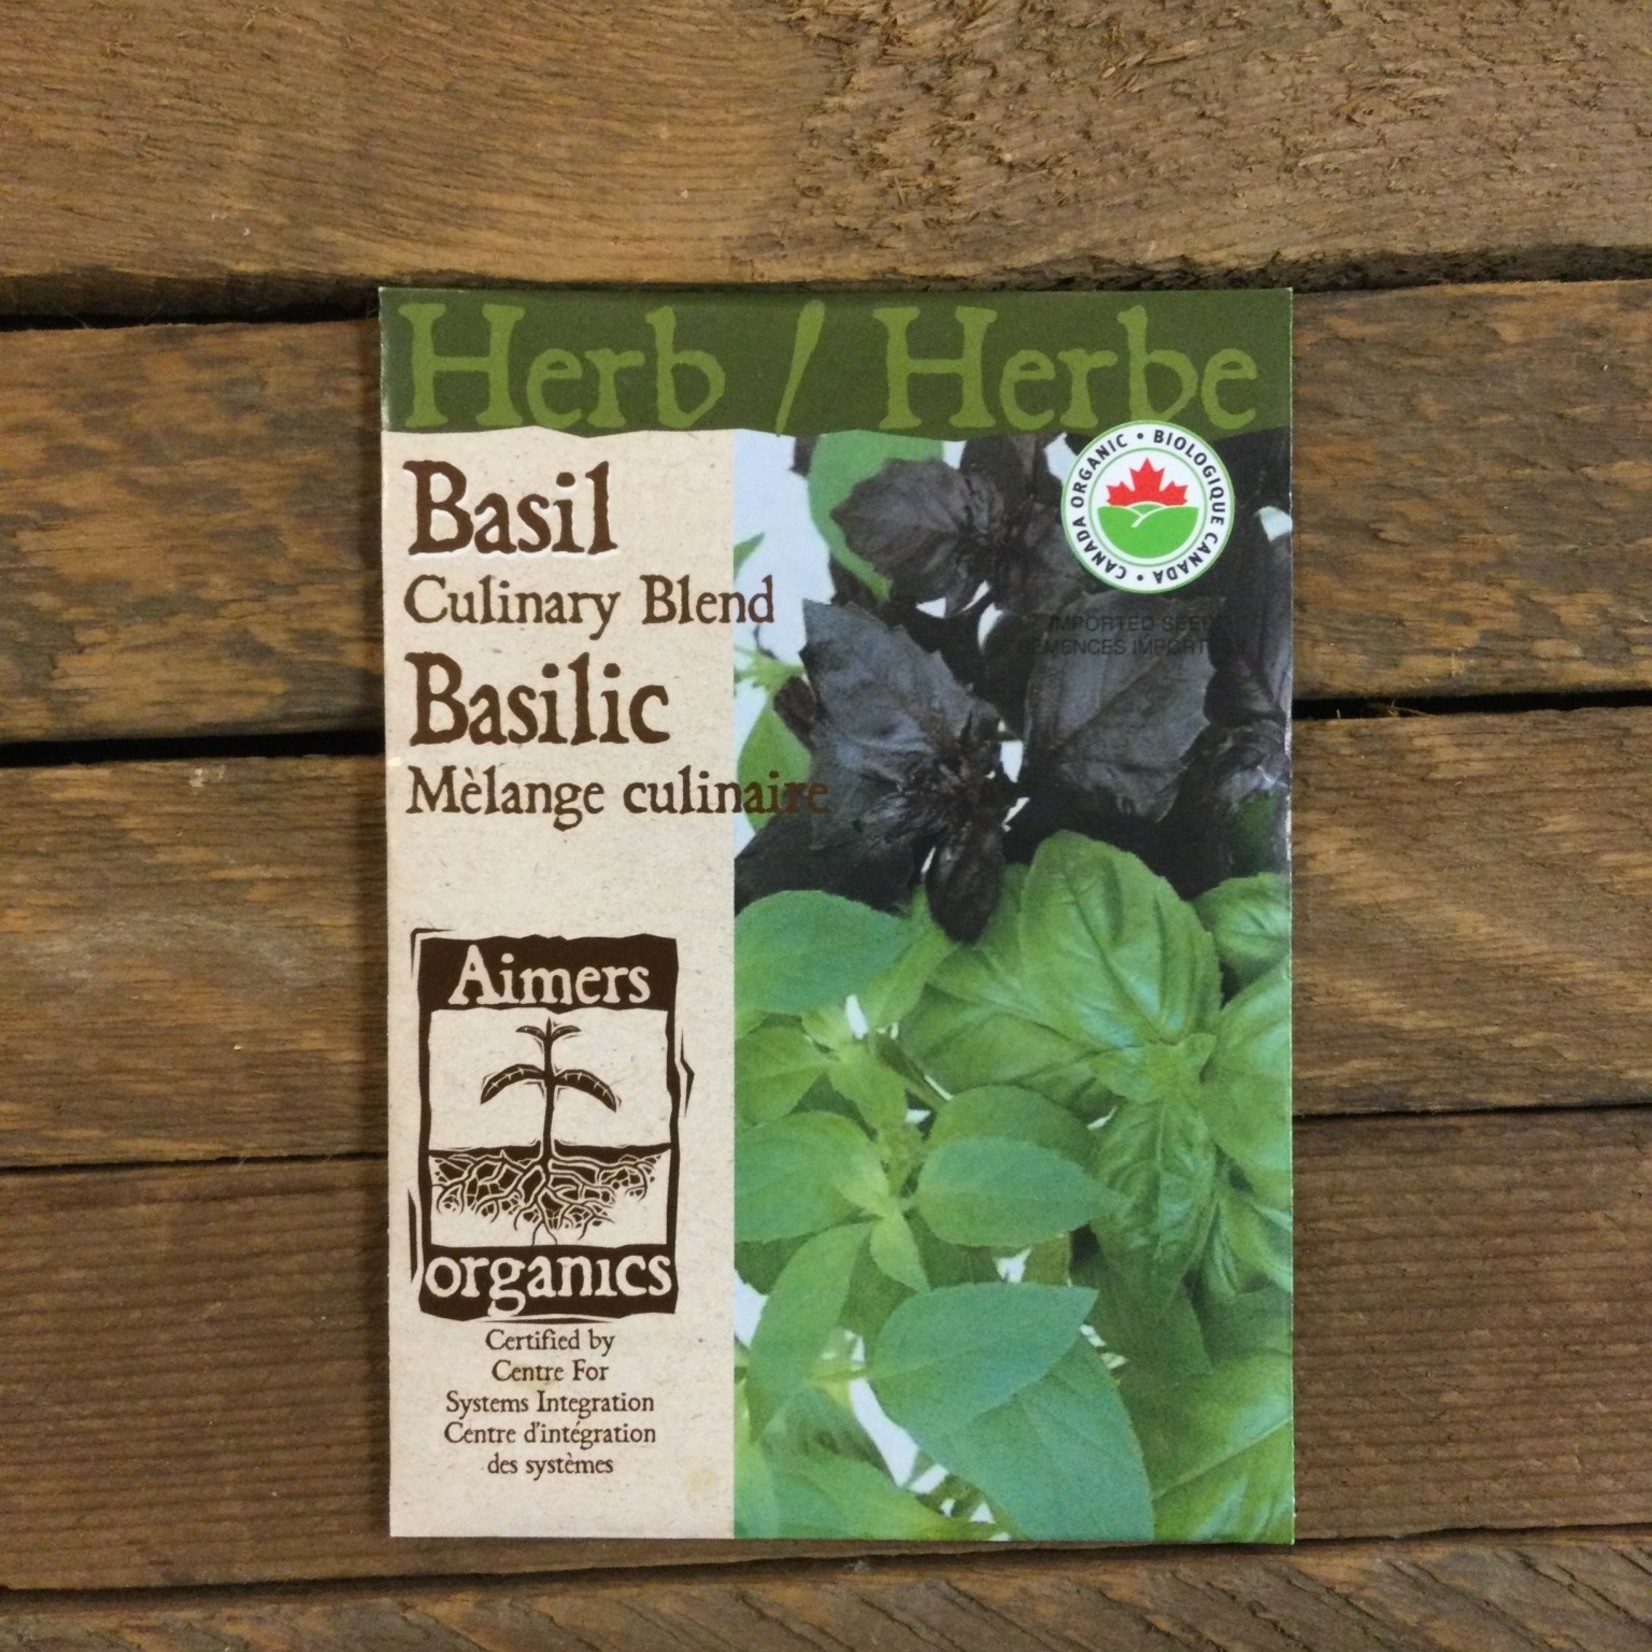 Aimers Basil "culinary Blend" organic seeds